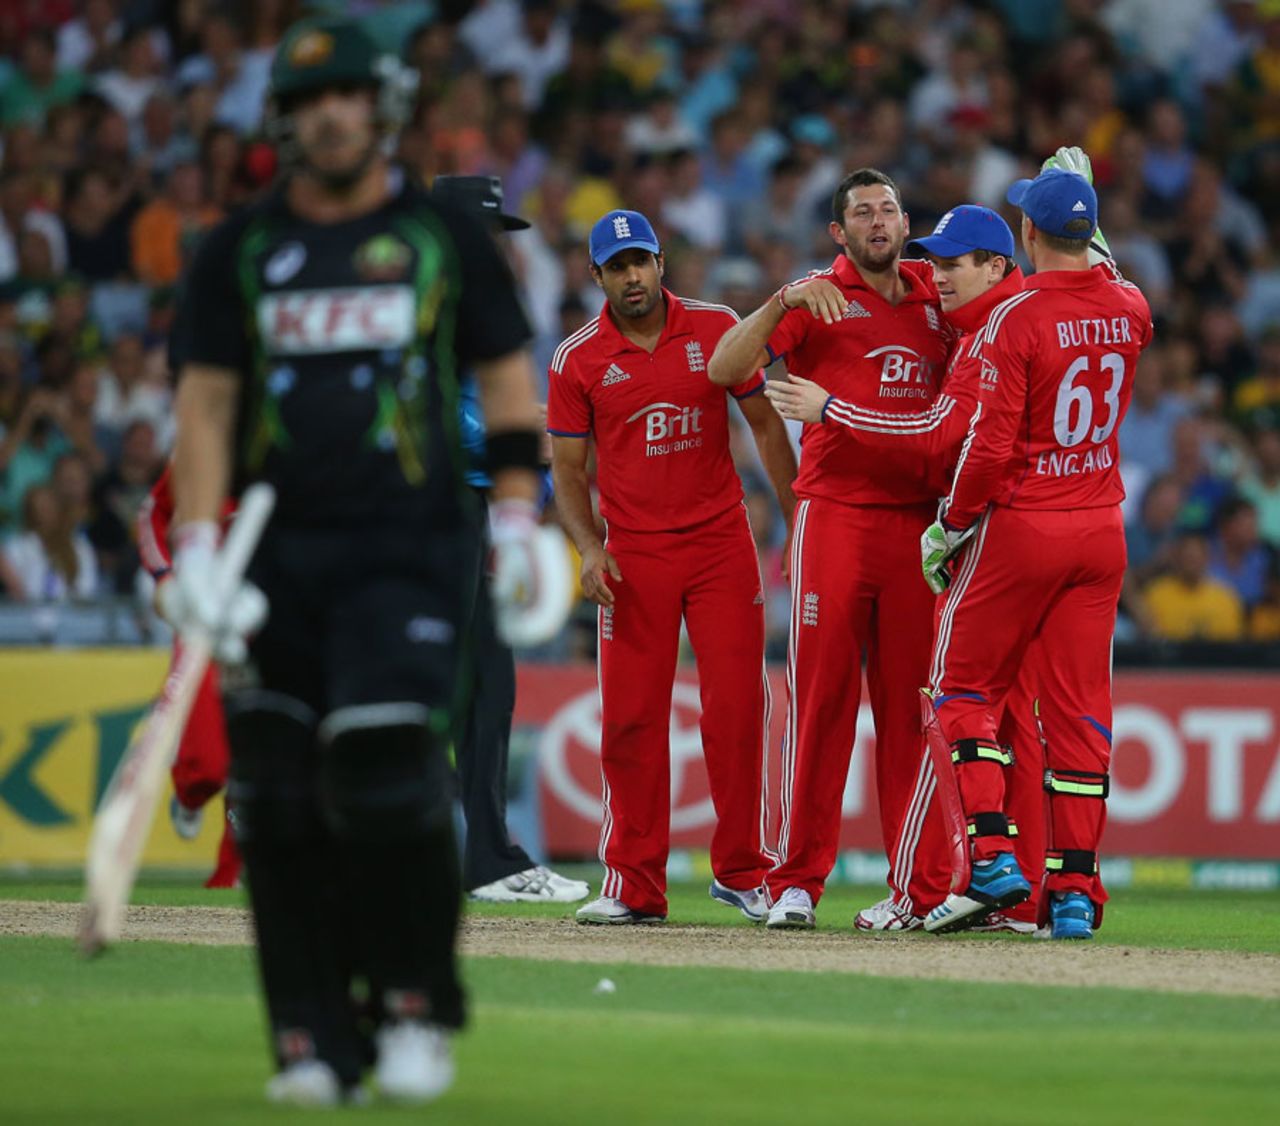 Tim Bresnan struck to remove Aaron Finch, Australia v England, 2nd T20, Sydney, February, 2, 2014